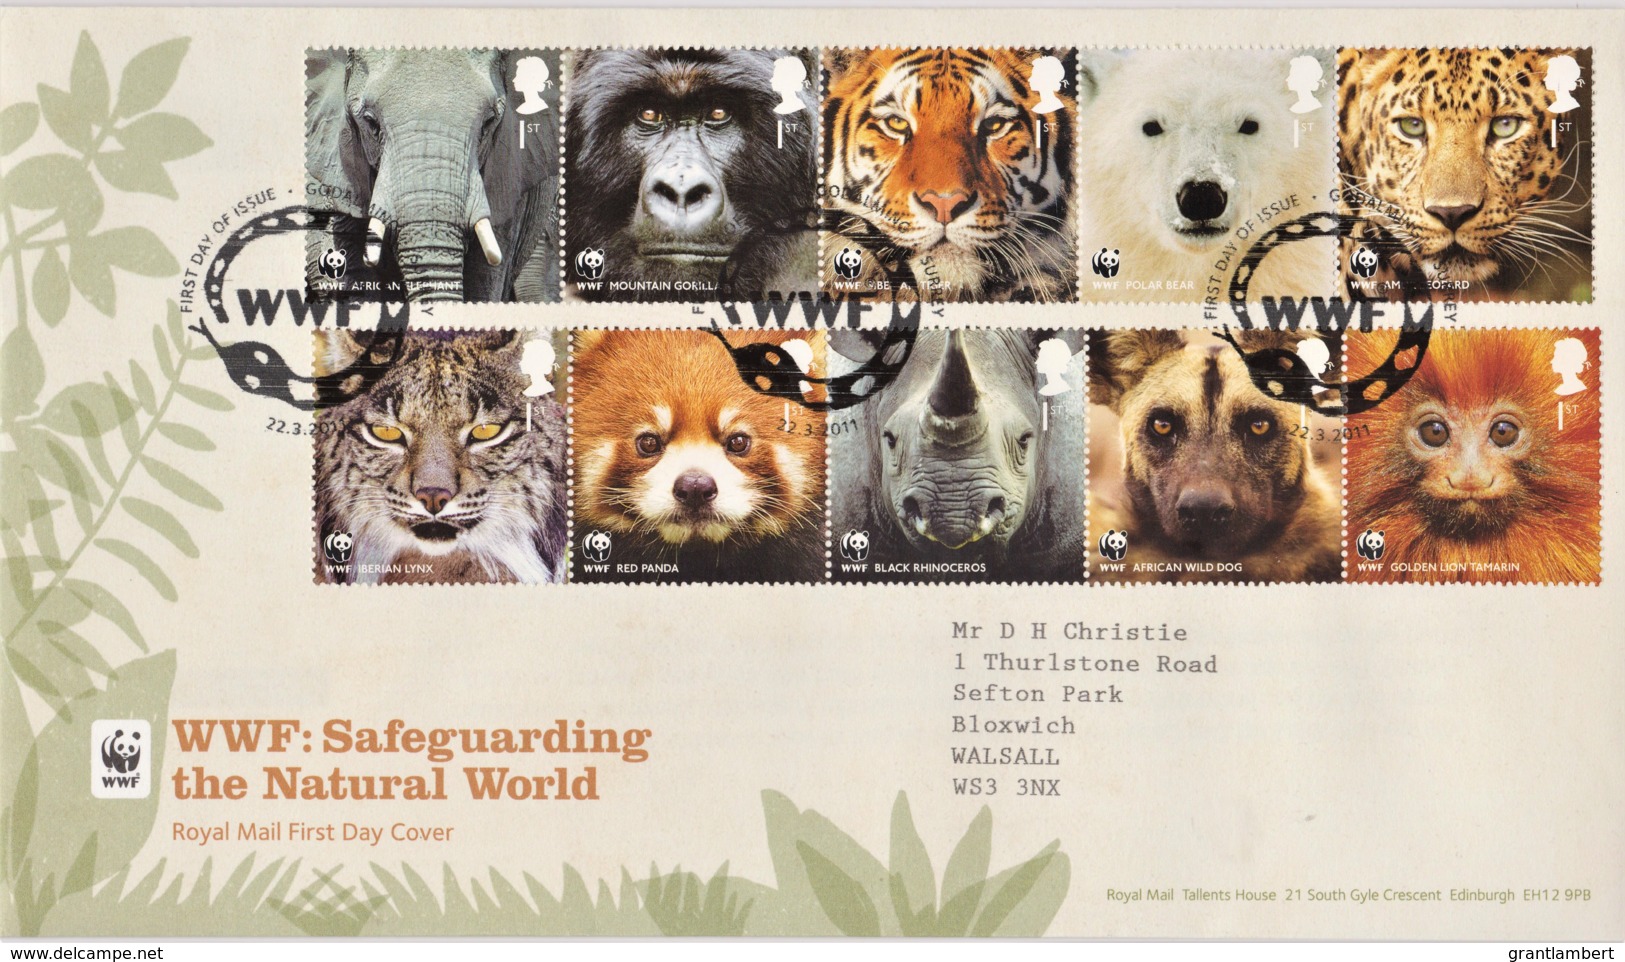 Great Britain 2011 Mammals Block Of 10 WWF FDC - 2011-2020 Ediciones Decimales